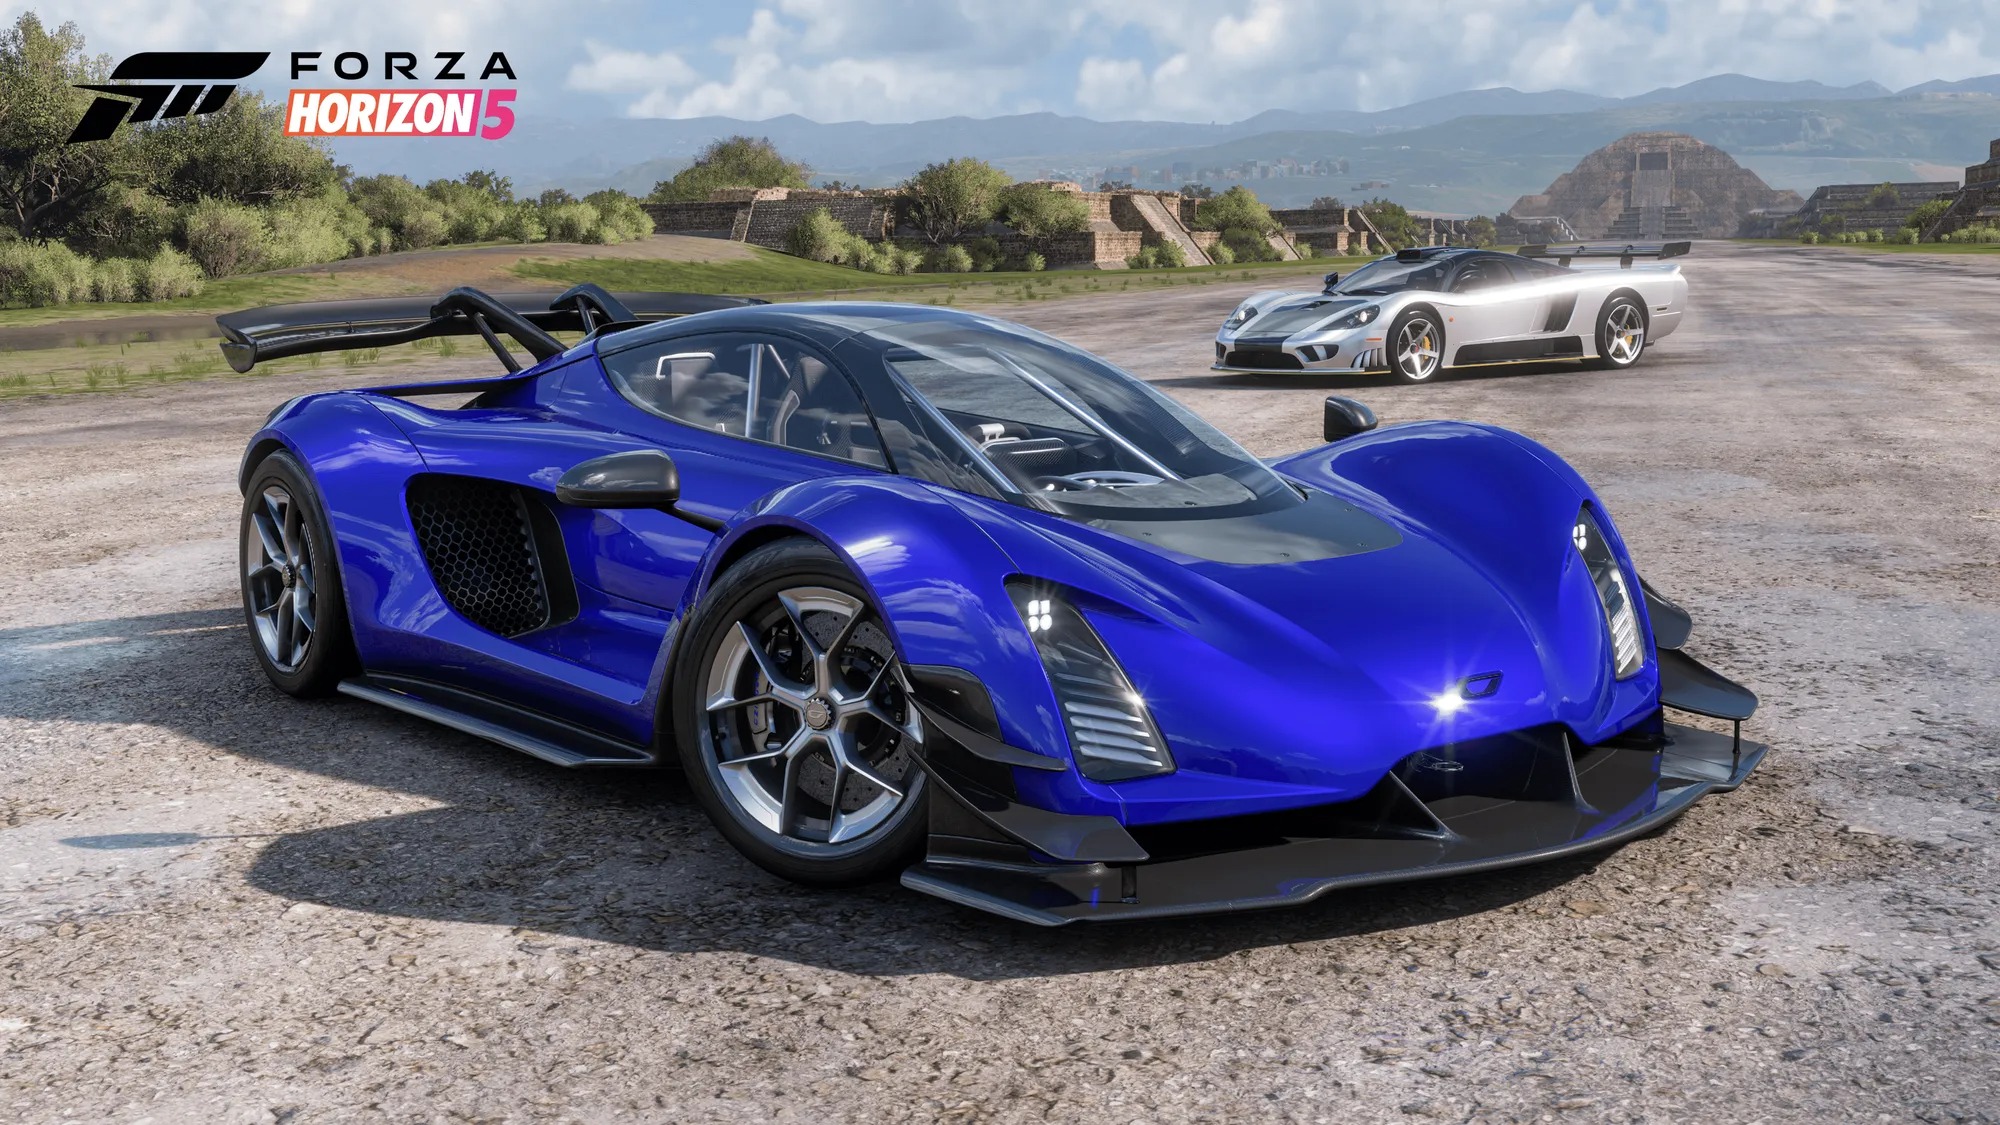 Image of Forza Horizon 5 American Automotive.